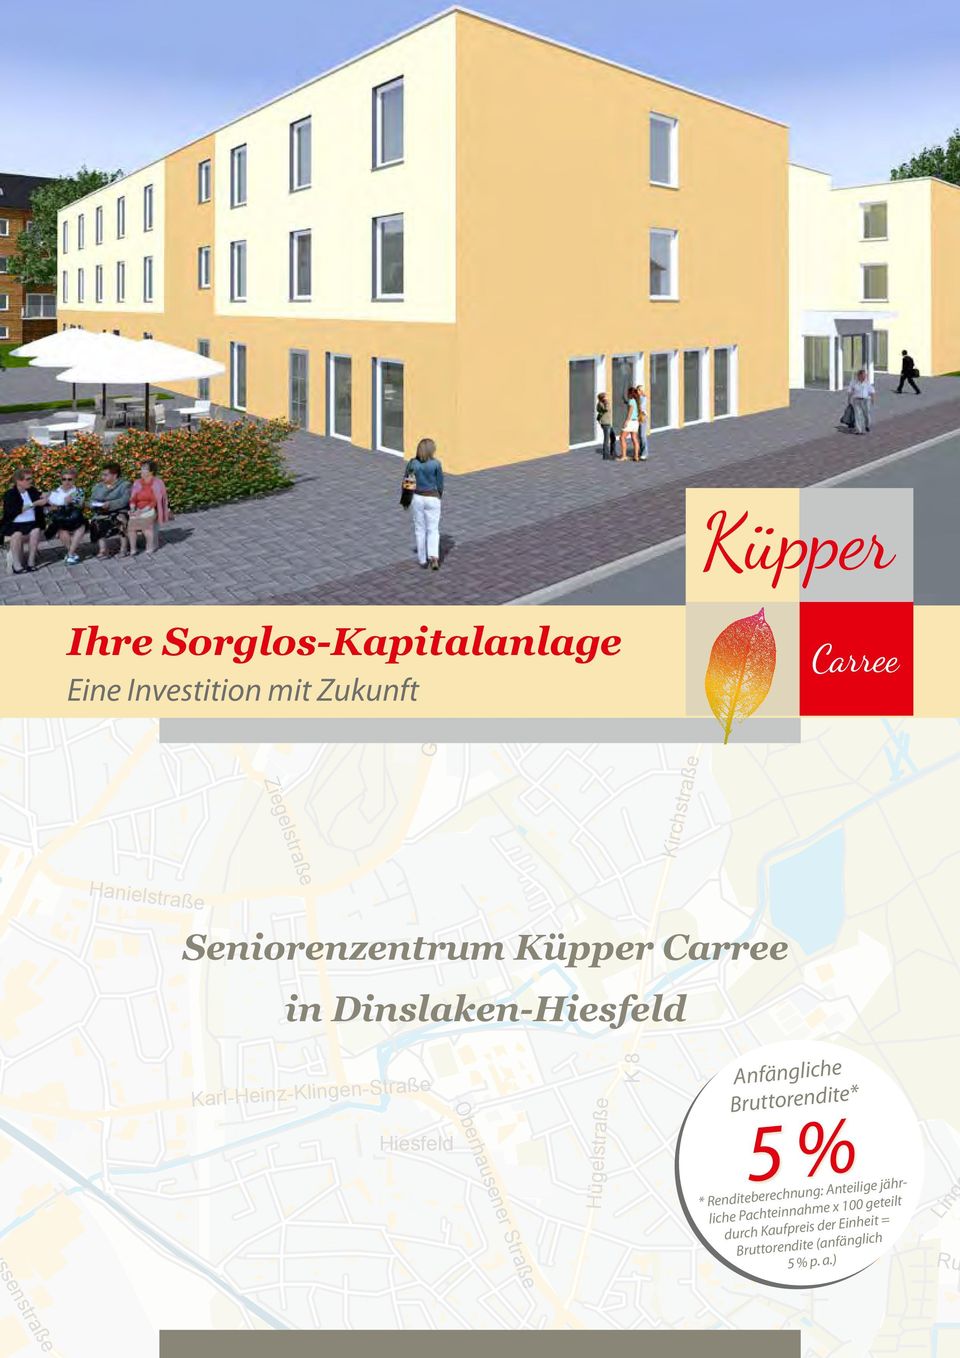 Karl-Heinz-Klingen-Straße Hiesfeld Oberhausener Straße Hügelstraße K 8 Anfängliche Bruttorendite* 5 % *